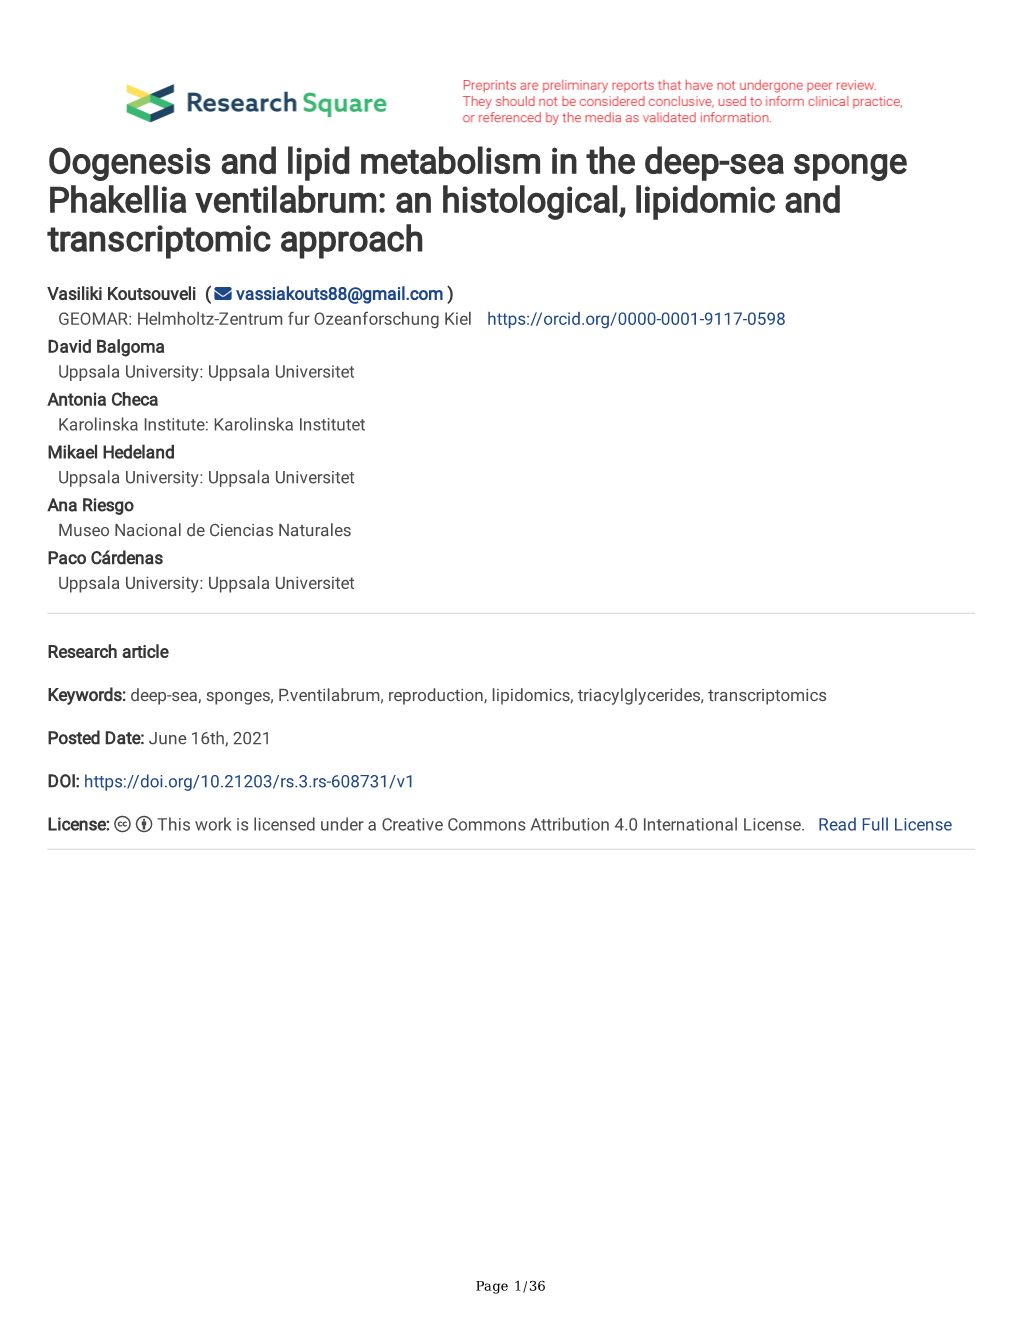 Oogenesis and Lipid Metabolism in the Deep-Sea Sponge Phakellia Ventilabrum: an Histological, Lipidomic and Transcriptomic Approach